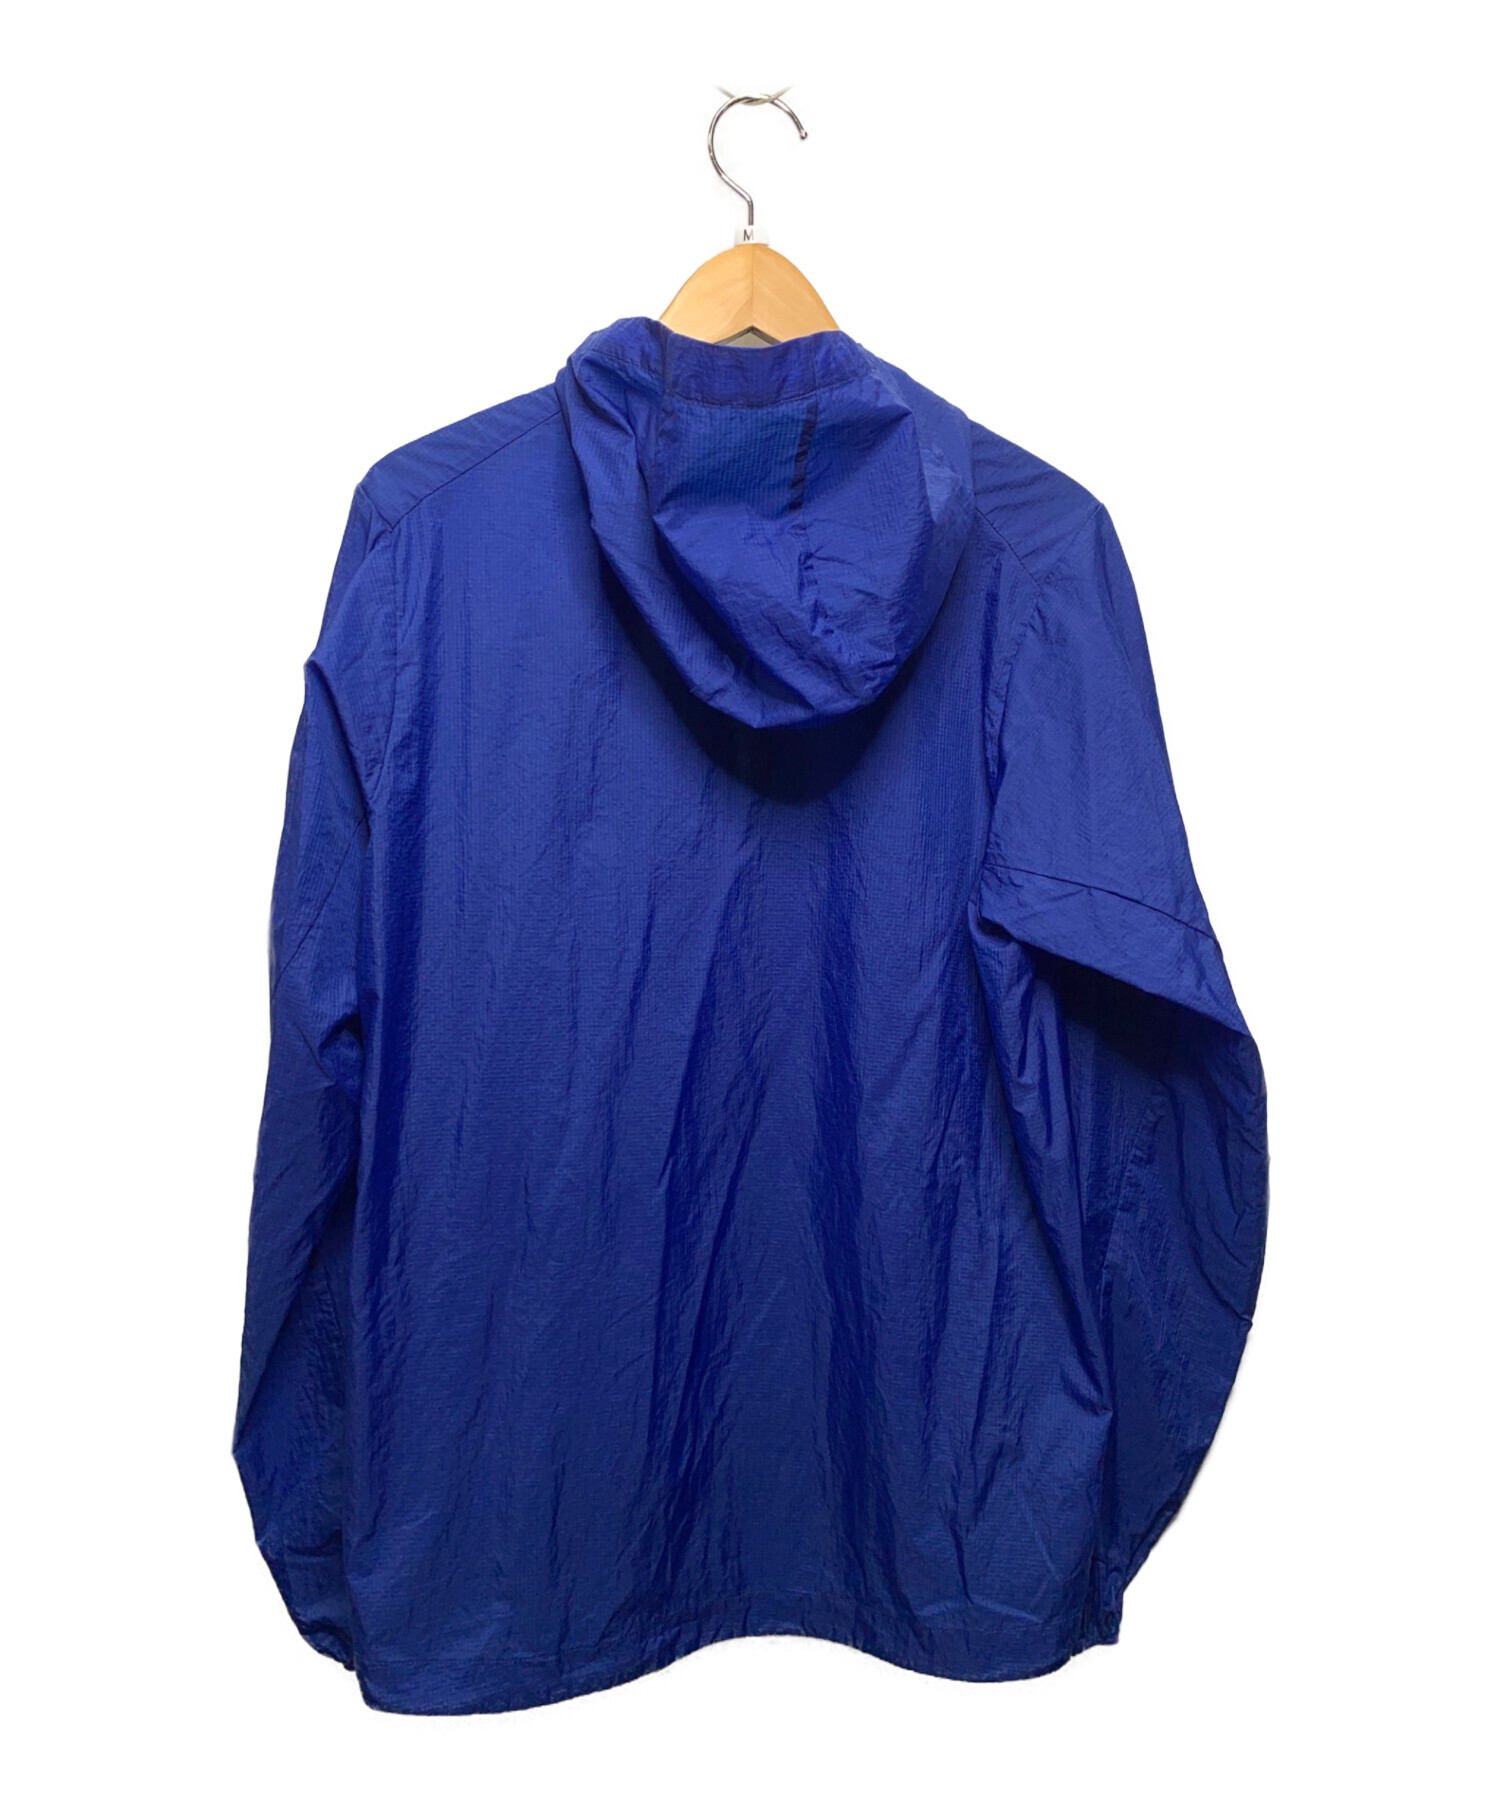 Patagonia (パタゴニア) フーディニジャケット ブルー サイズ:M